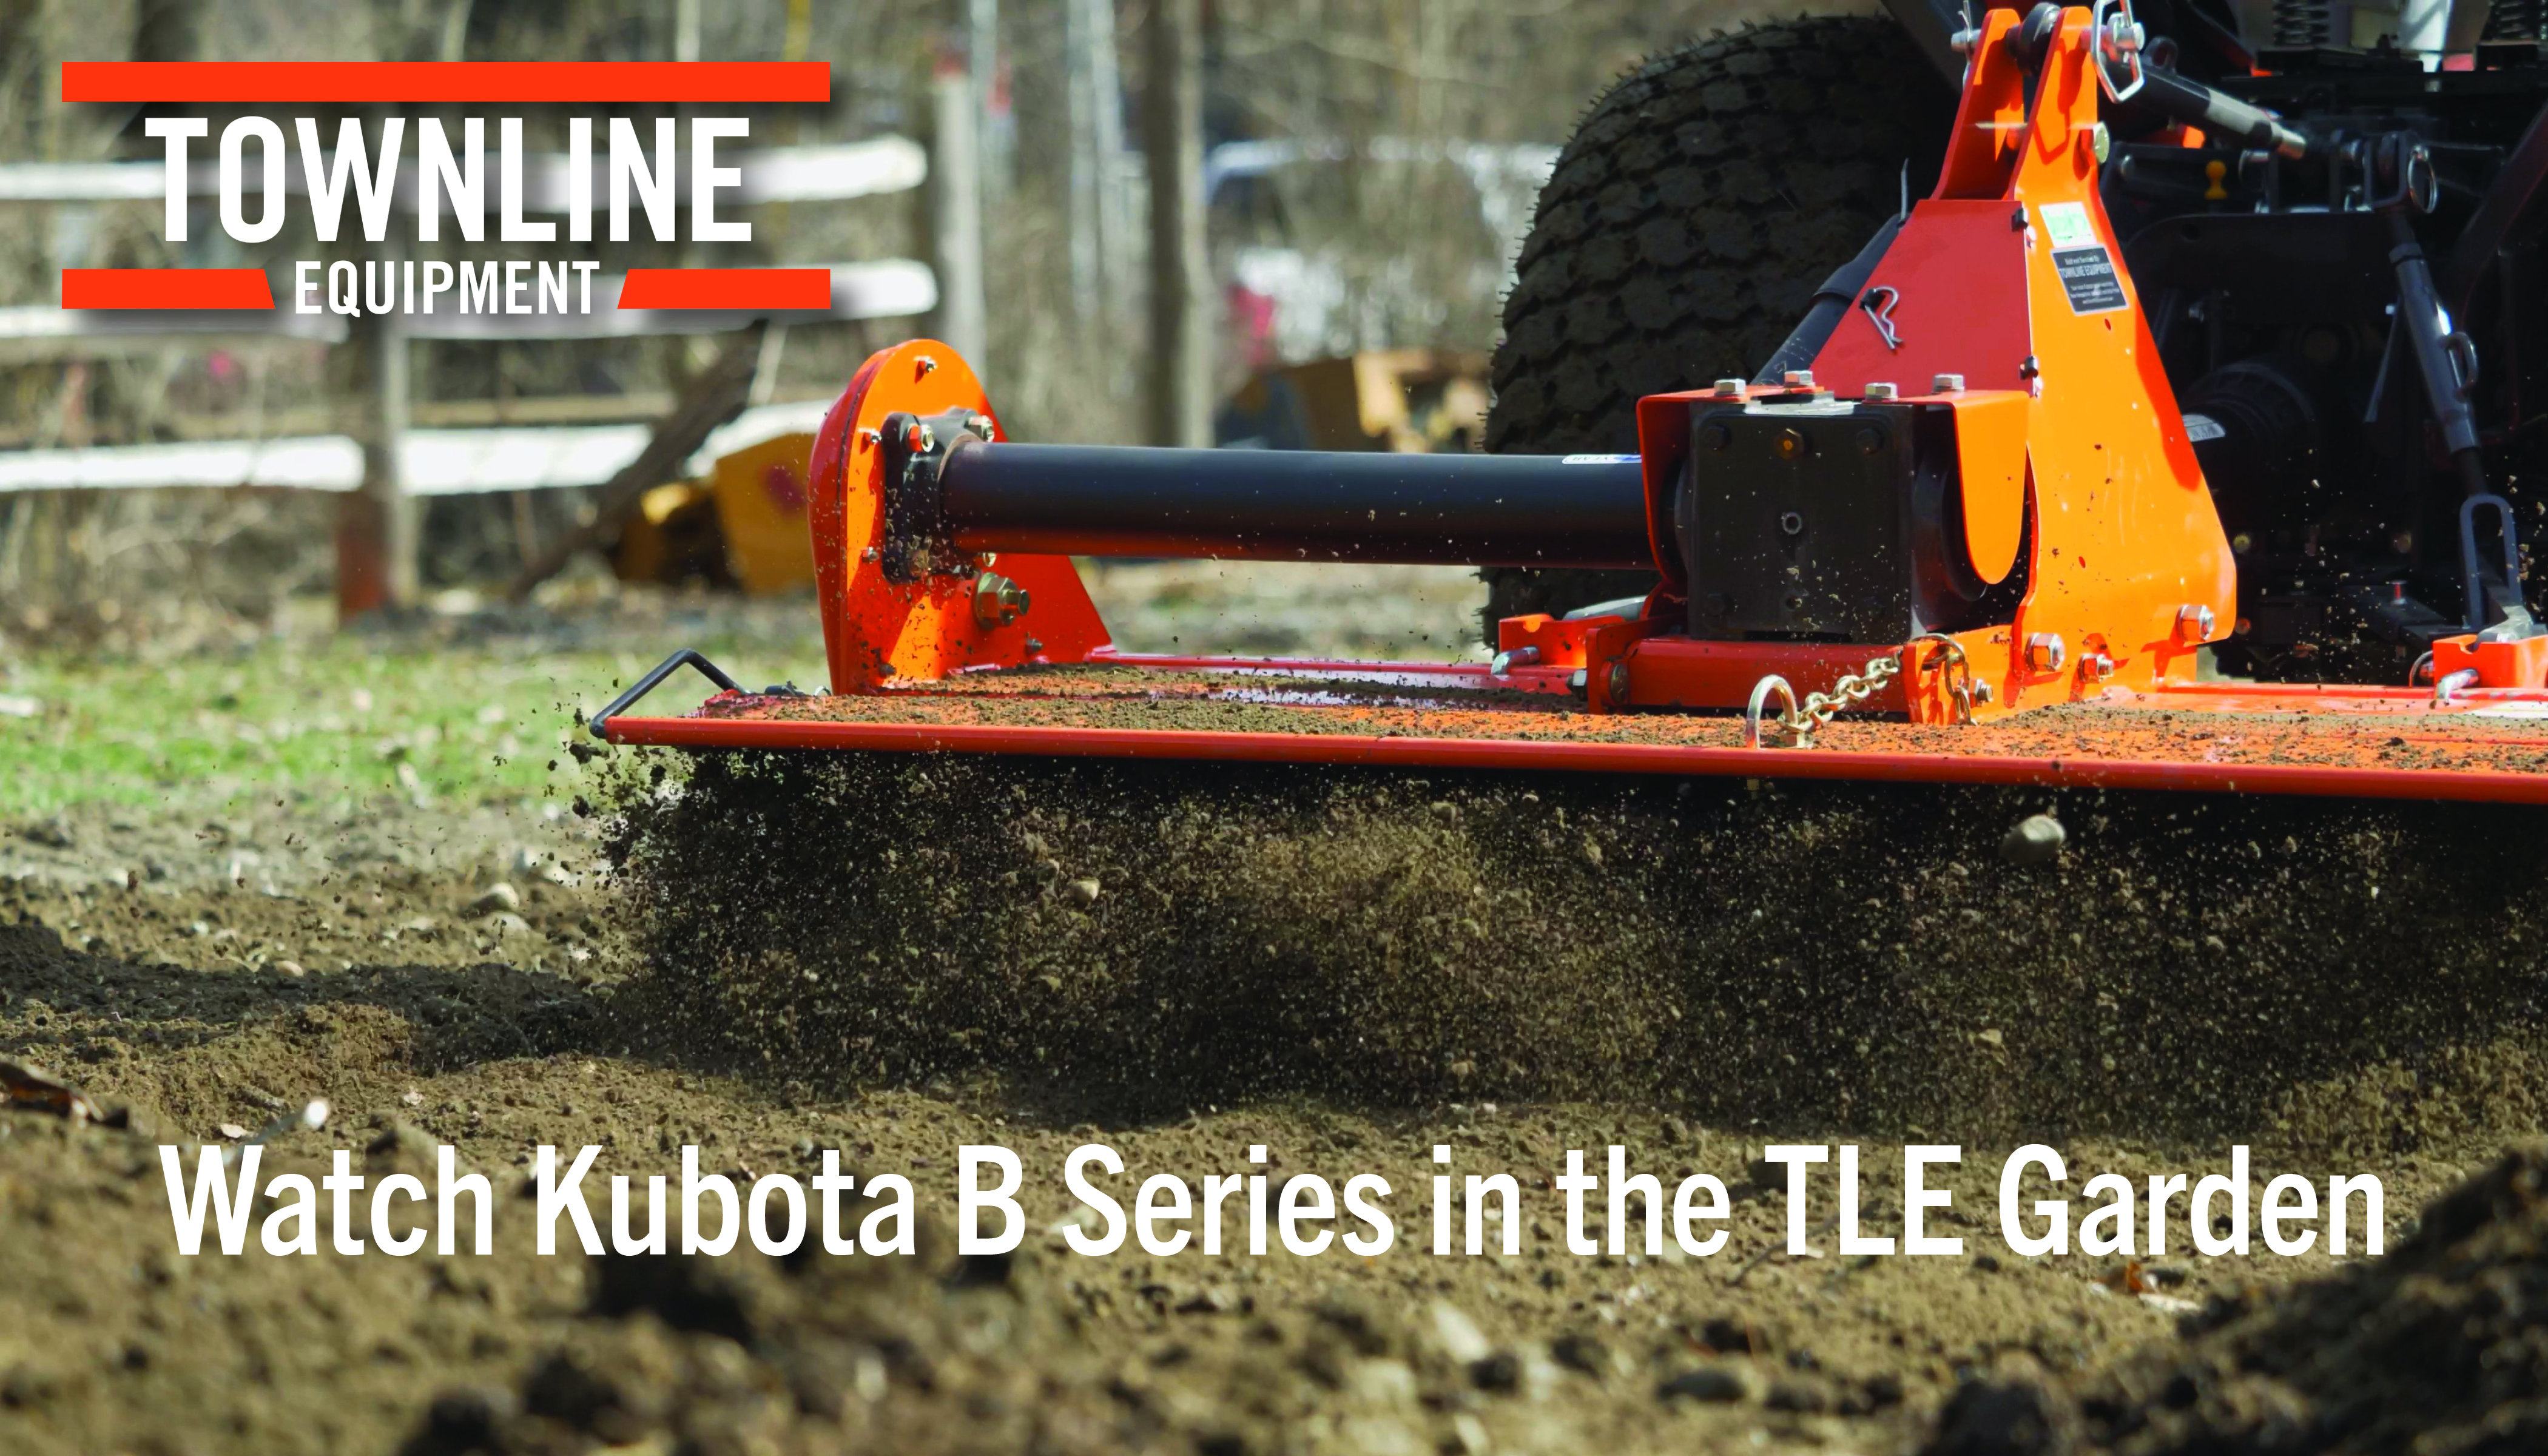 Kubota B Series in action in the TLE Garden